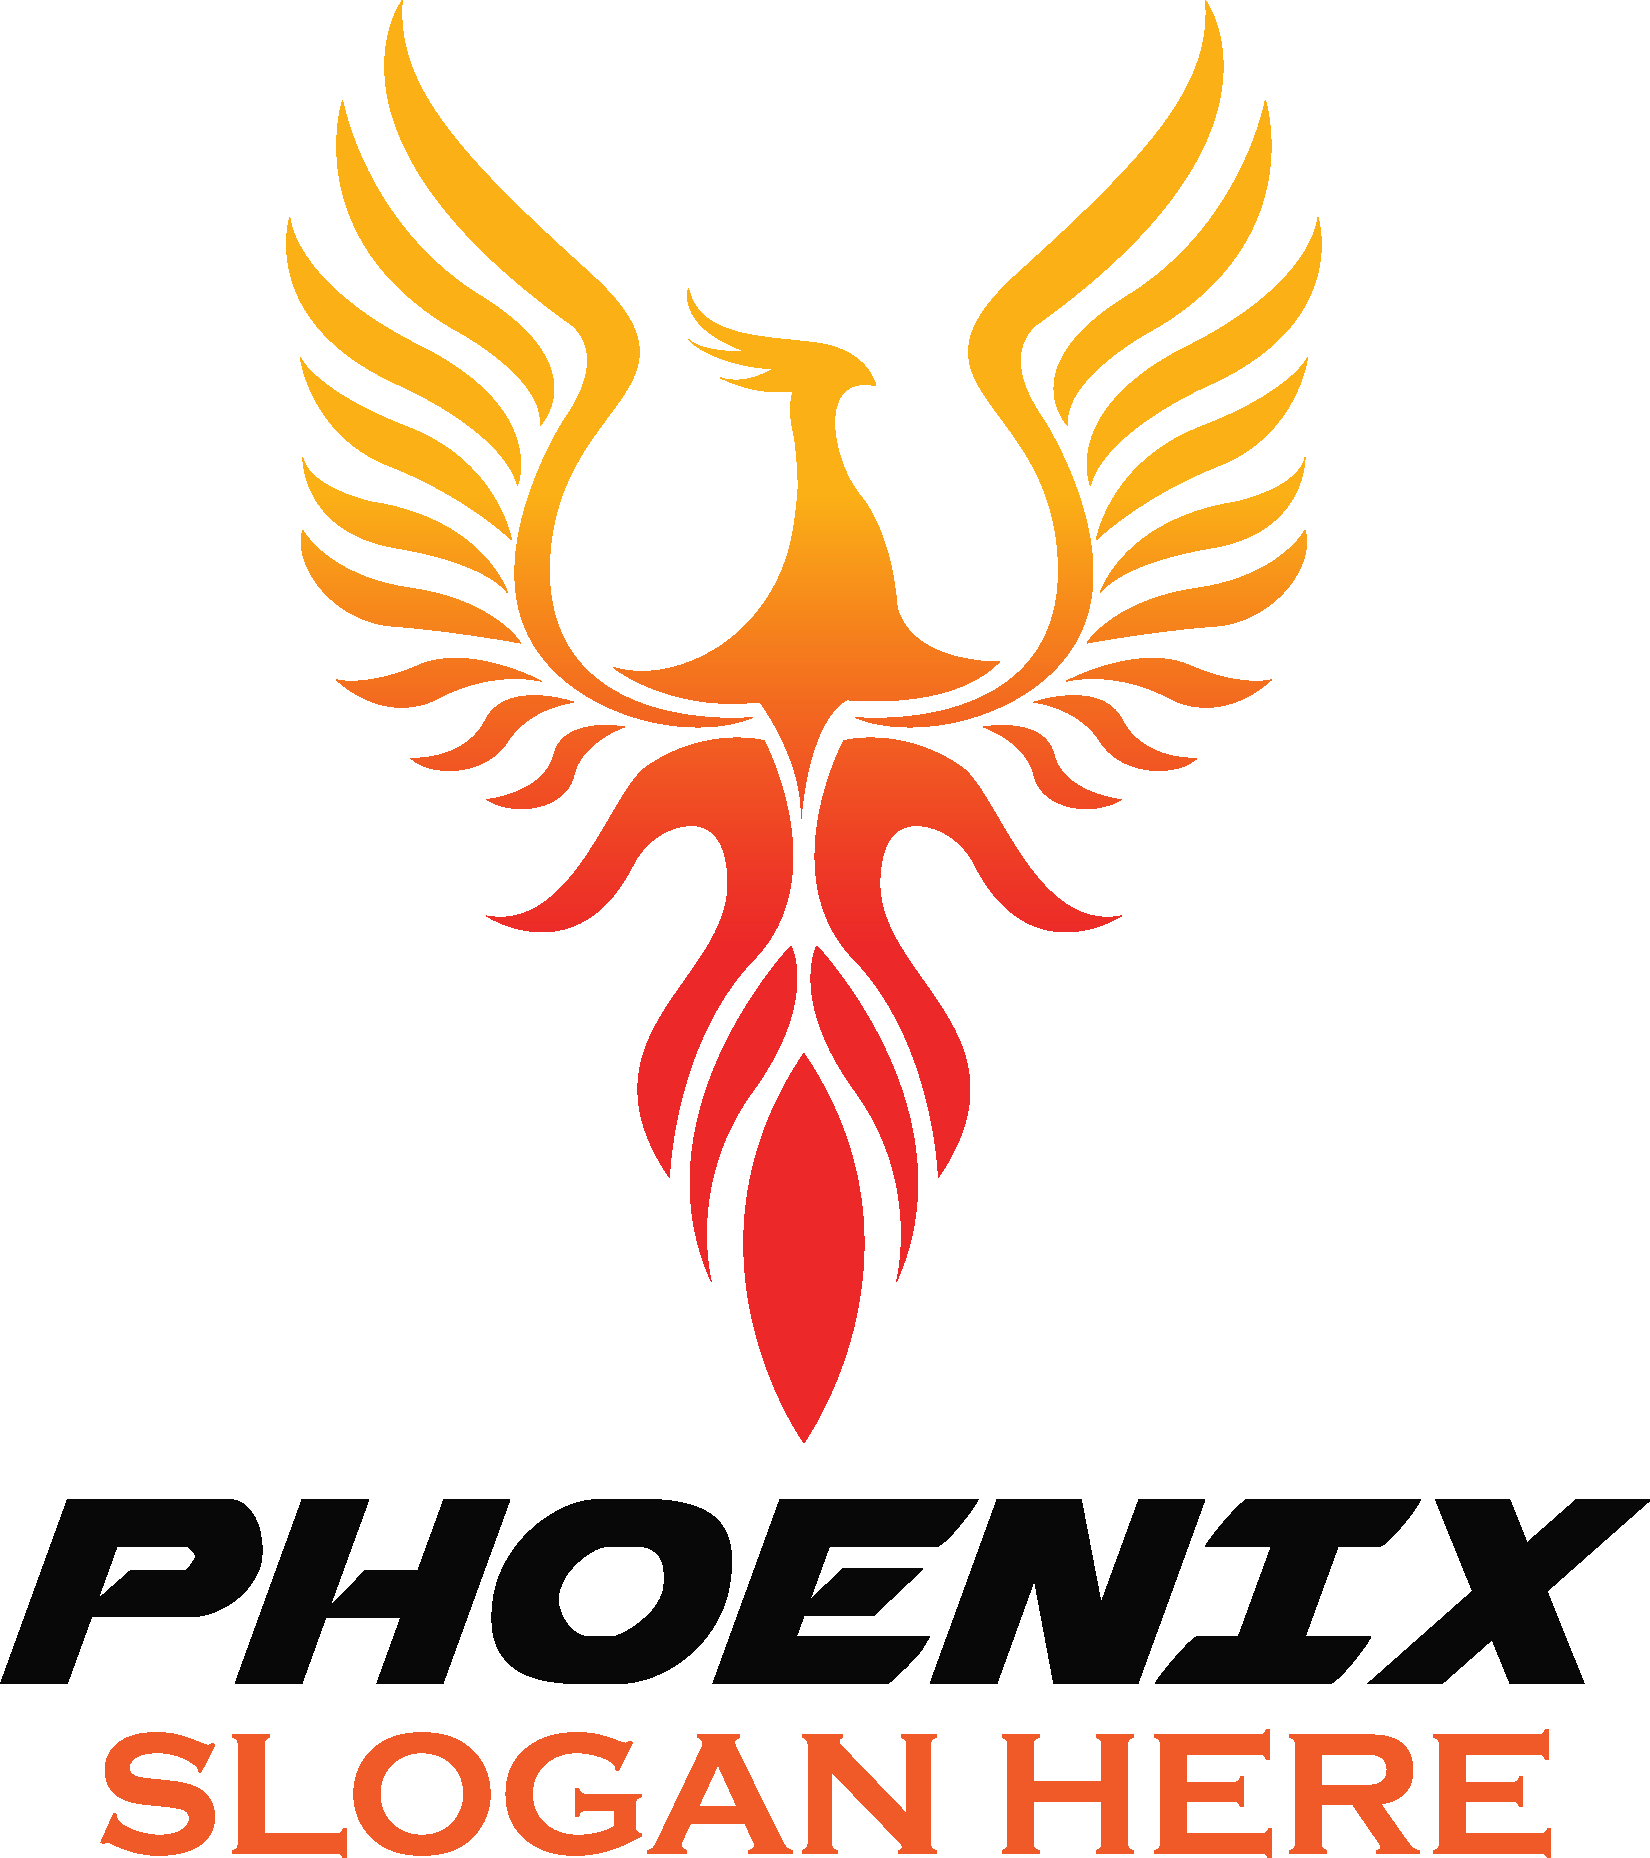 Phoenix Logo Hd Transparent, Phoenix Logo Vector Design, Phoenix Clipart,  Phoenix, Flag PNG Image For Free Download